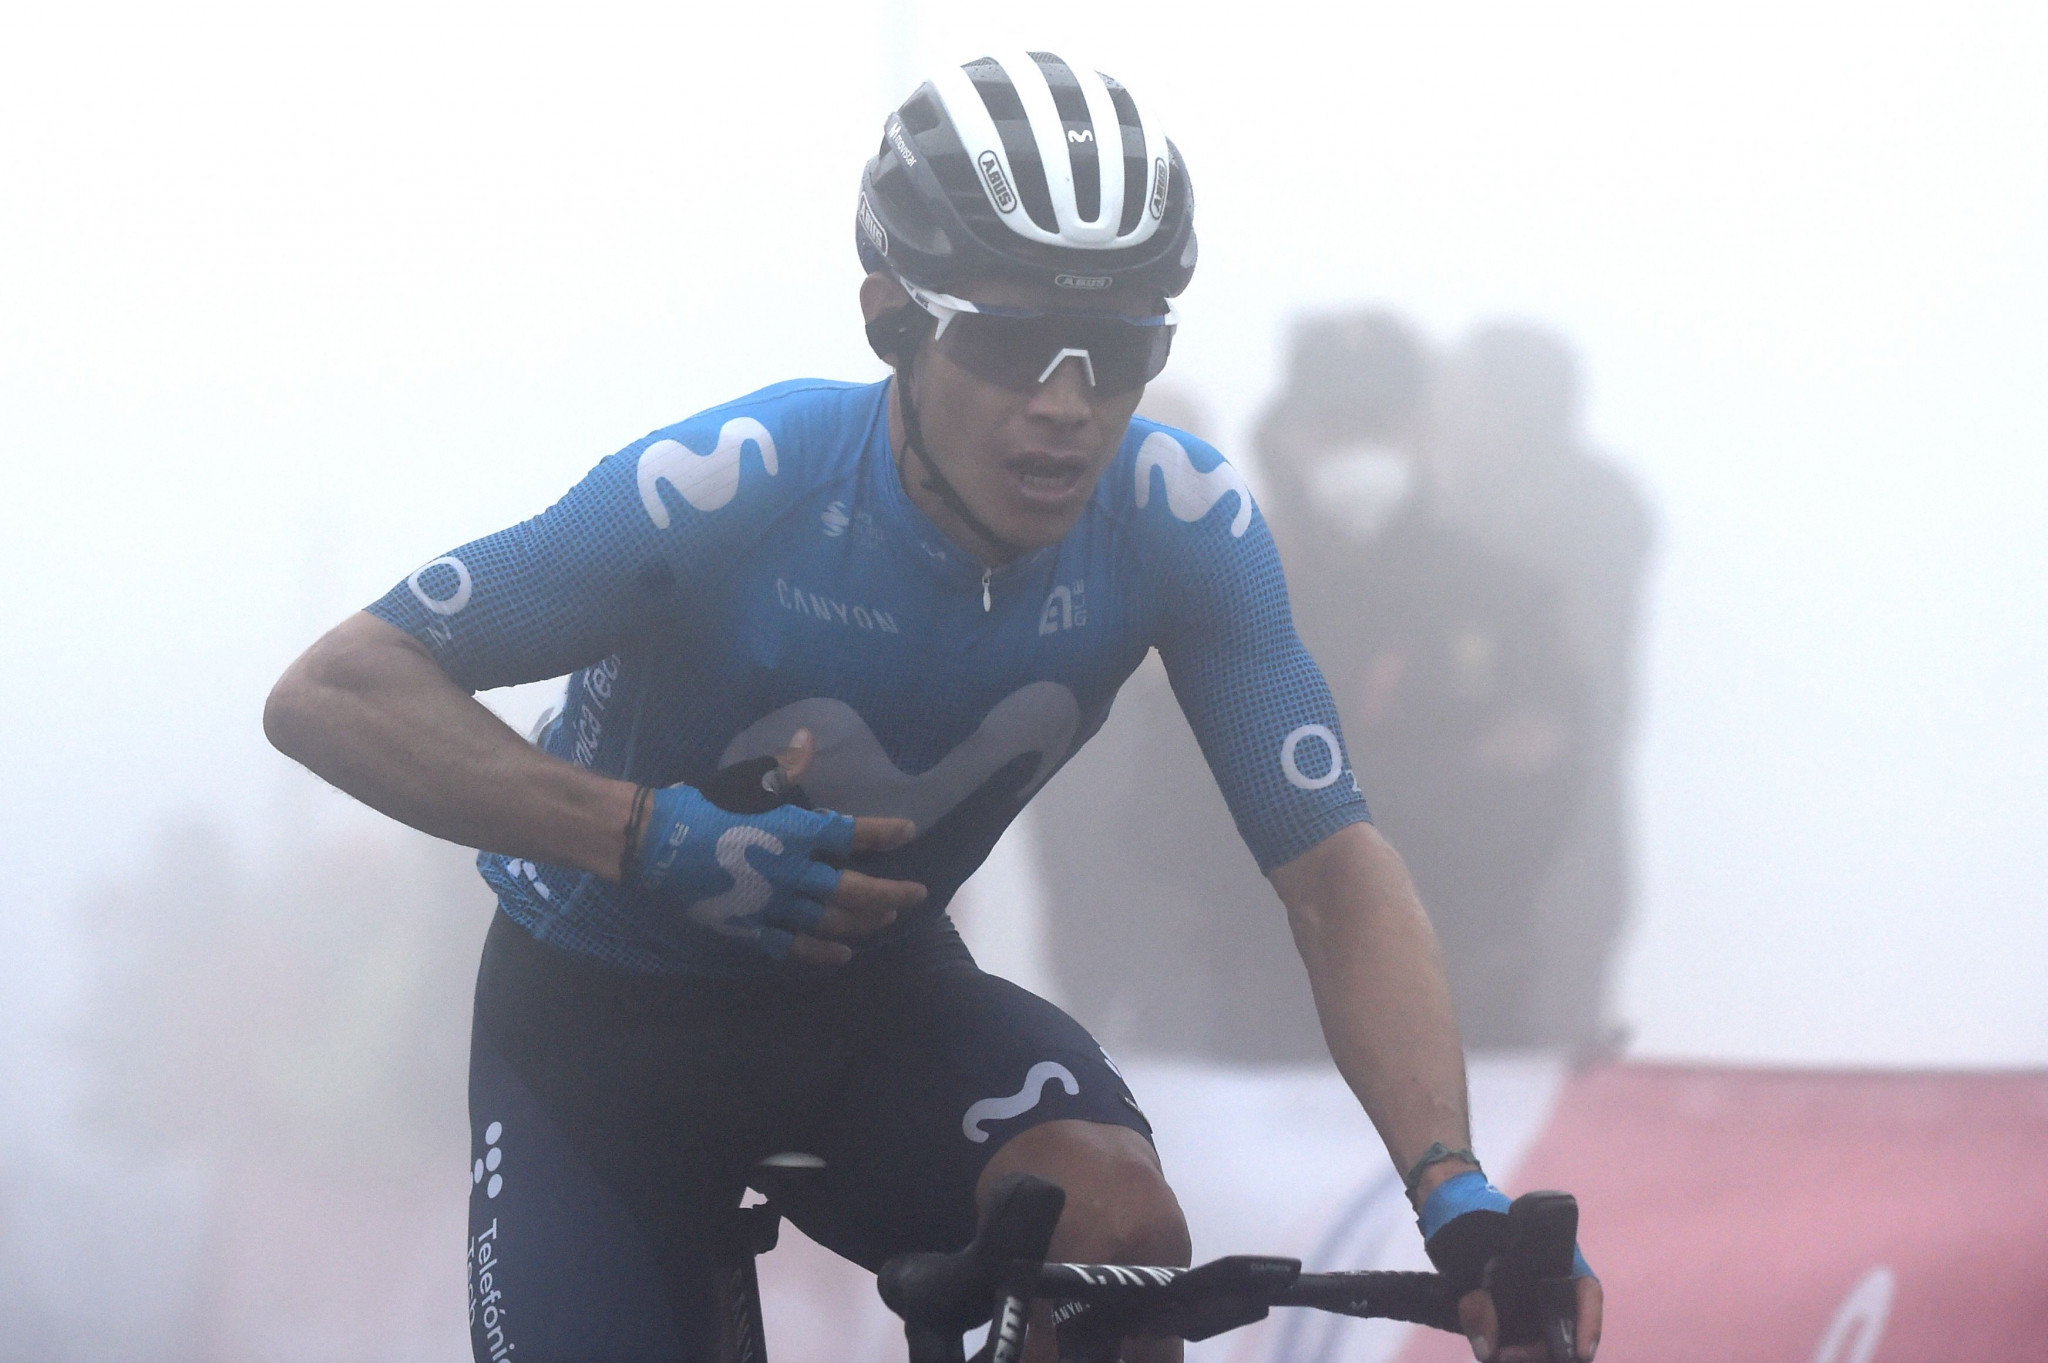 López wins 18th stage of Vuelta as Roglič extends lead